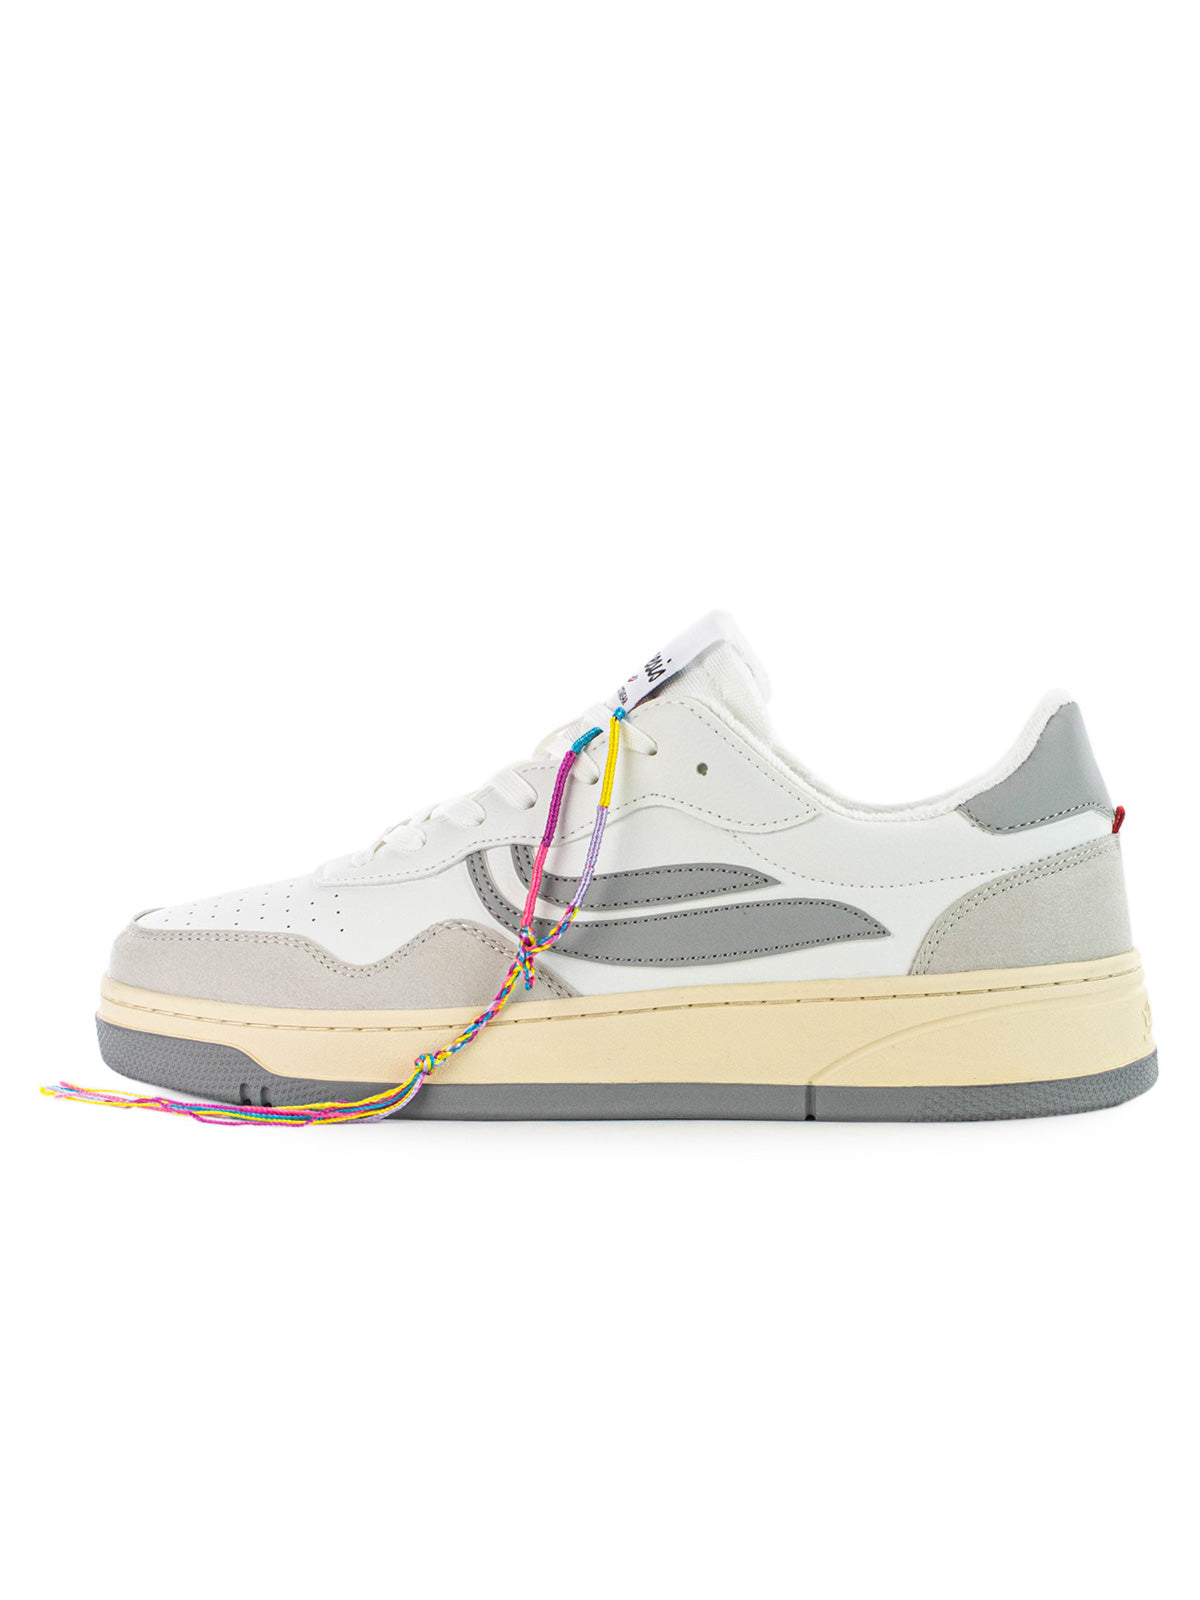 Sneaker Modell: G-Soley 2.0 Sugar Pina Offwhite/White/Grey